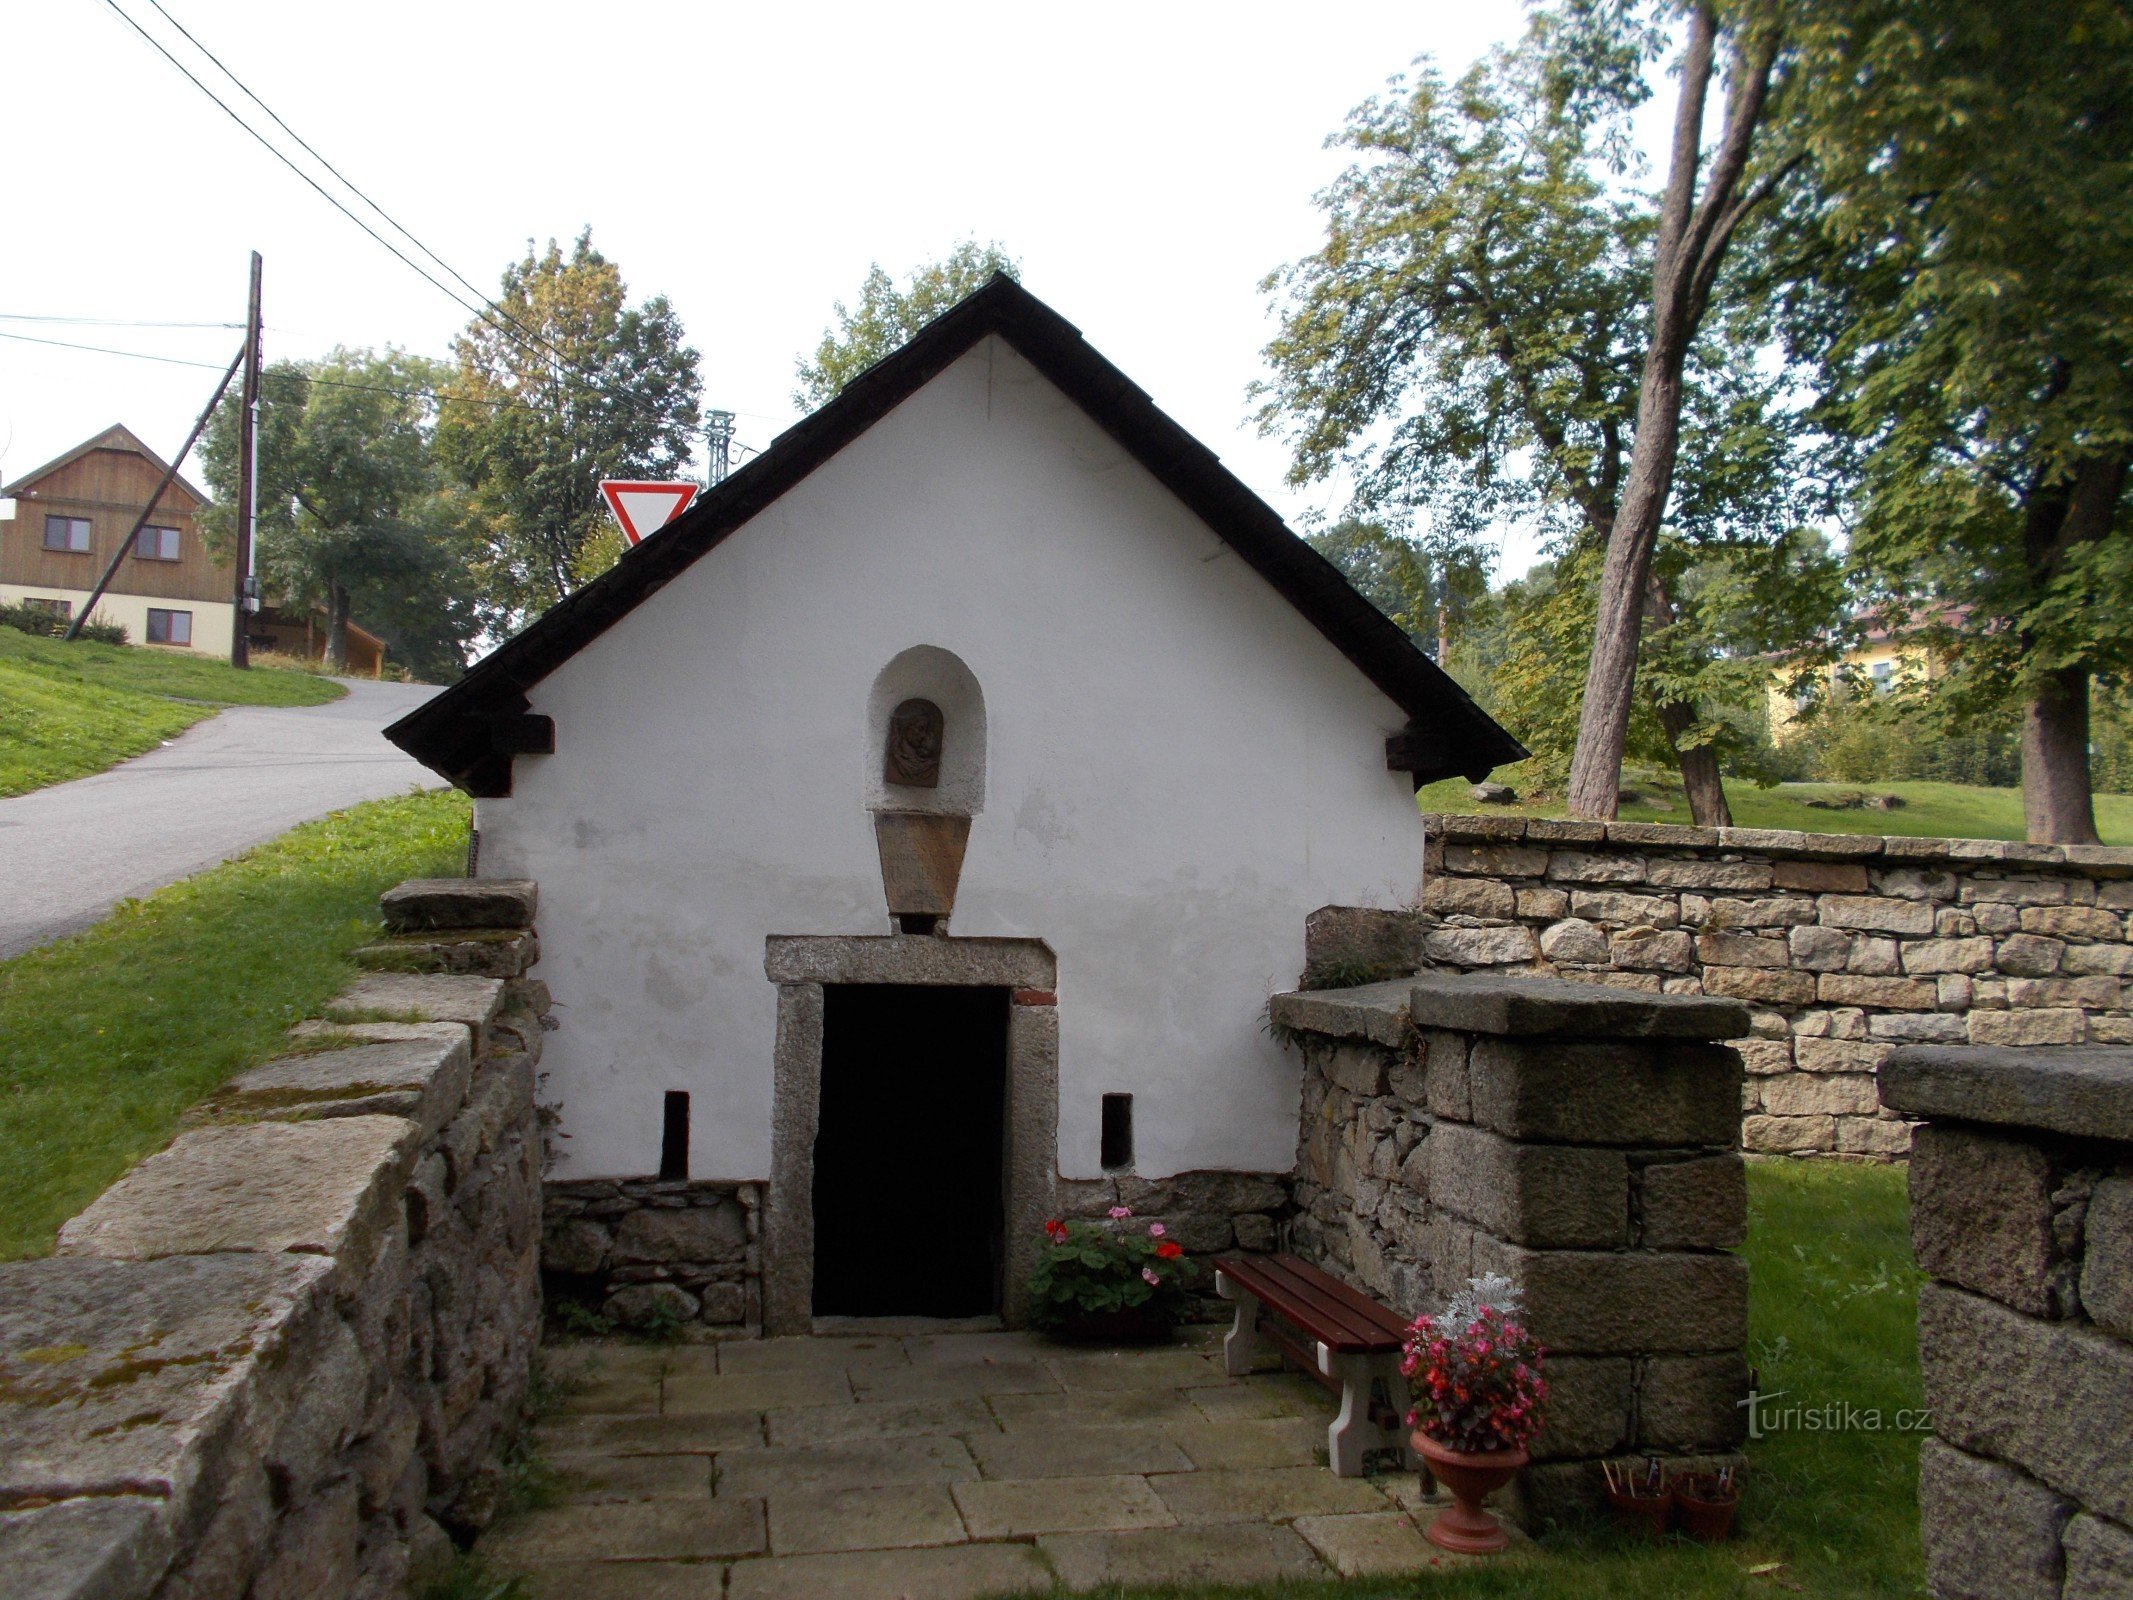 Väl nära kyrkan i Krásná